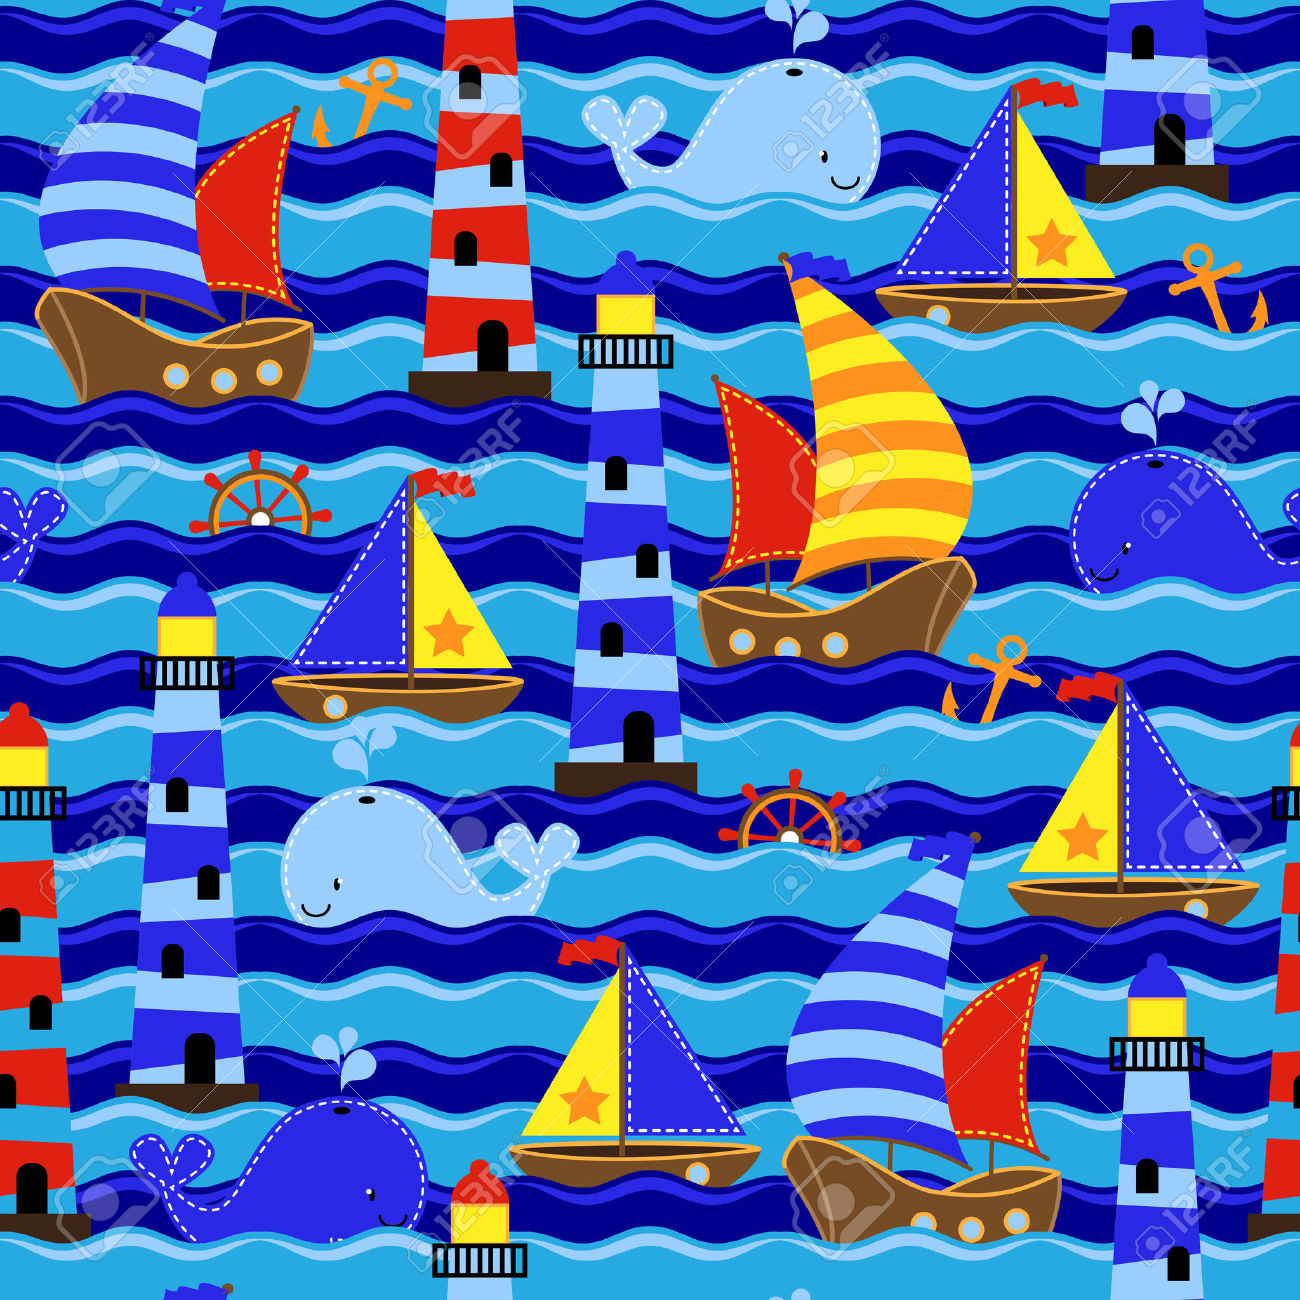 nautical themed wallpaper,pattern,art,textile